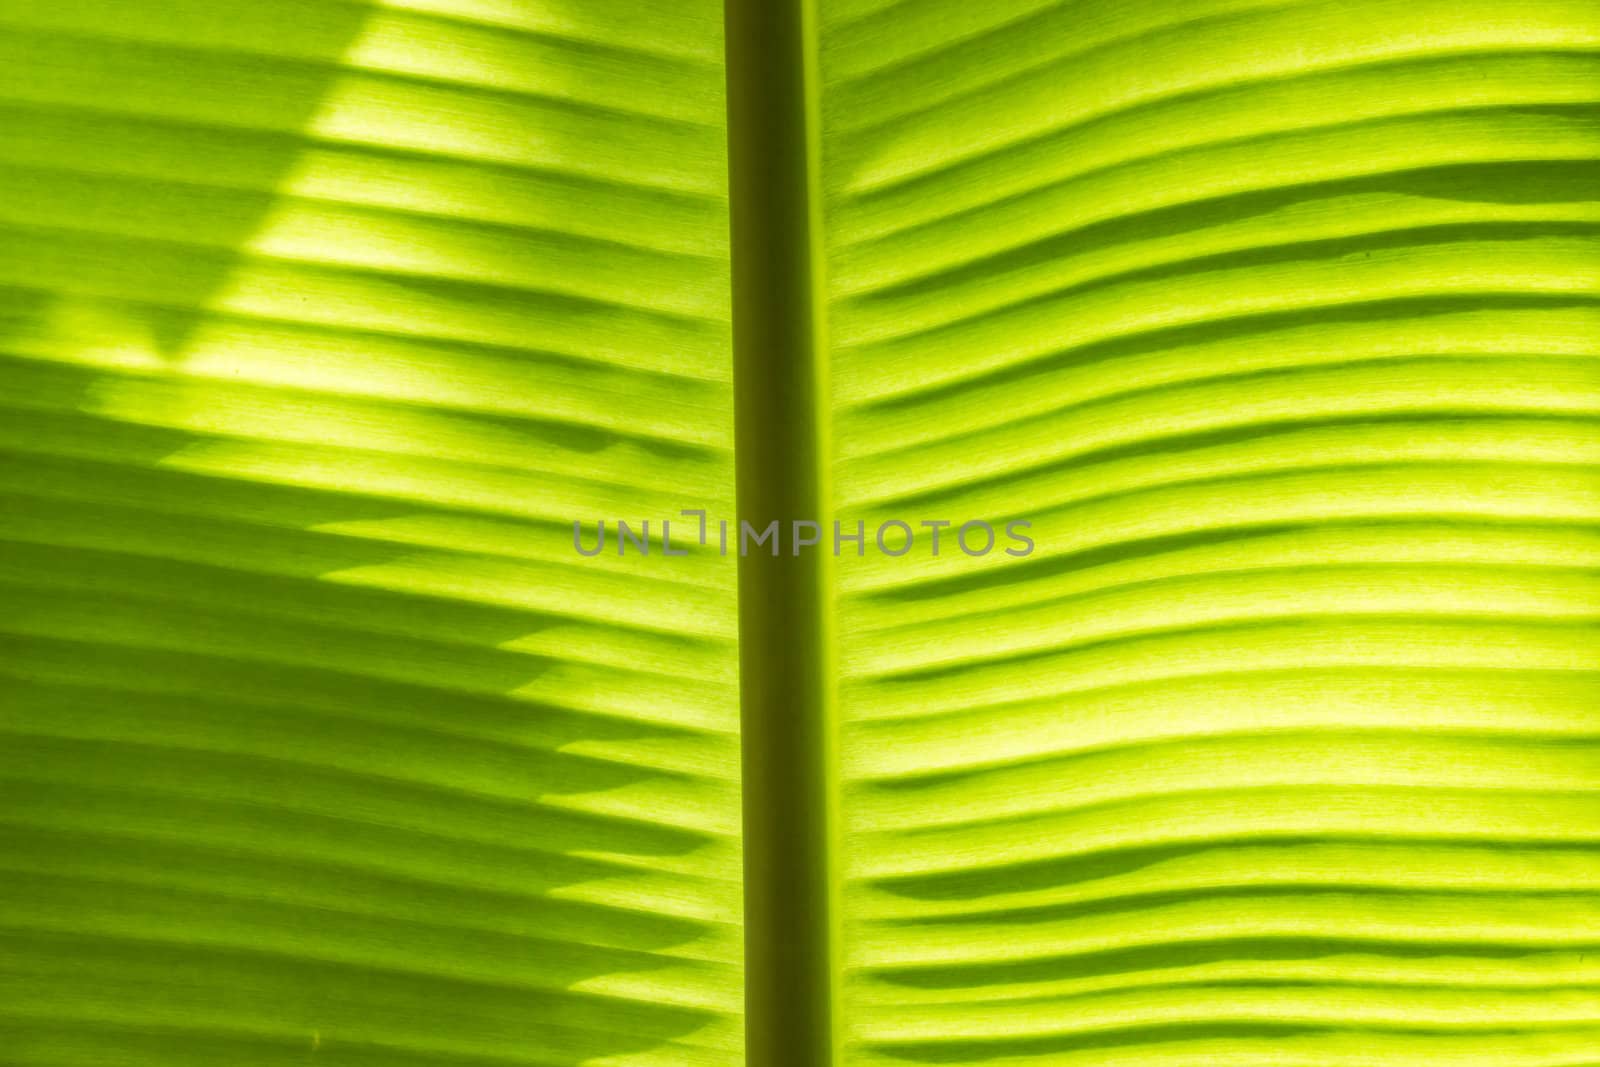 Bright Banana Leaf Background,Close-up a big banana leaf glowing in the sun